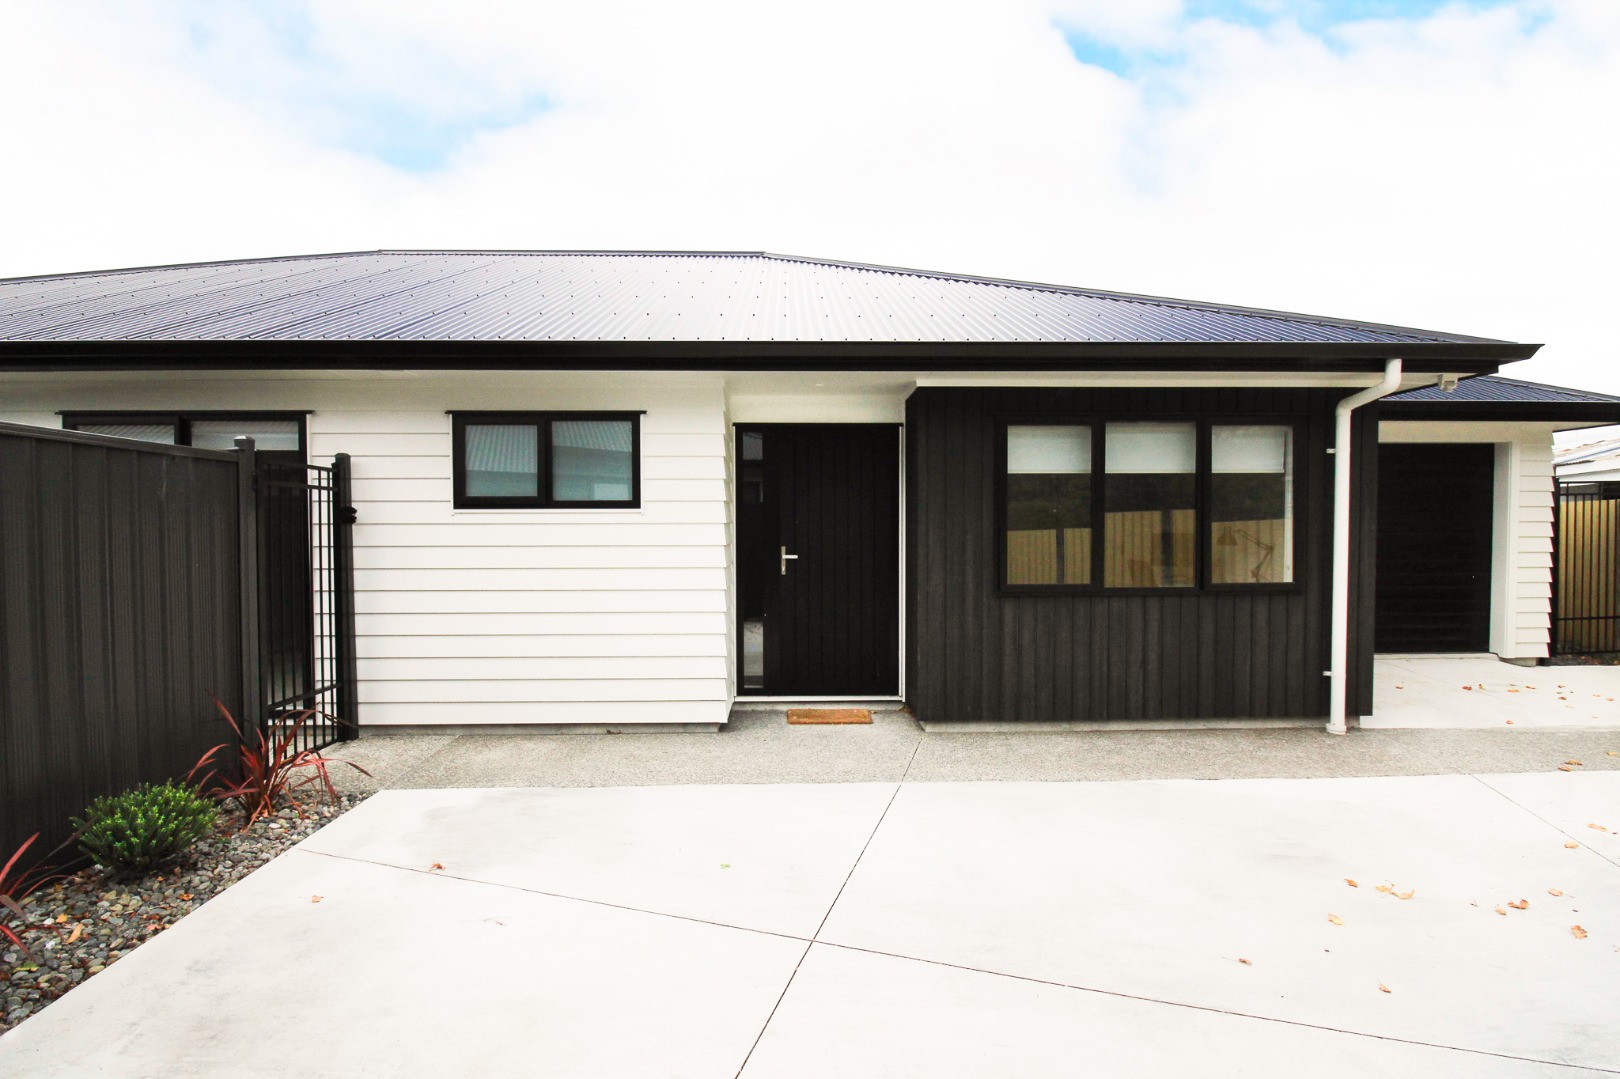 Real Estate For Rent Houses & Apartments : Trentham, 4 Bedrooms, Upper Hutt, Wellington